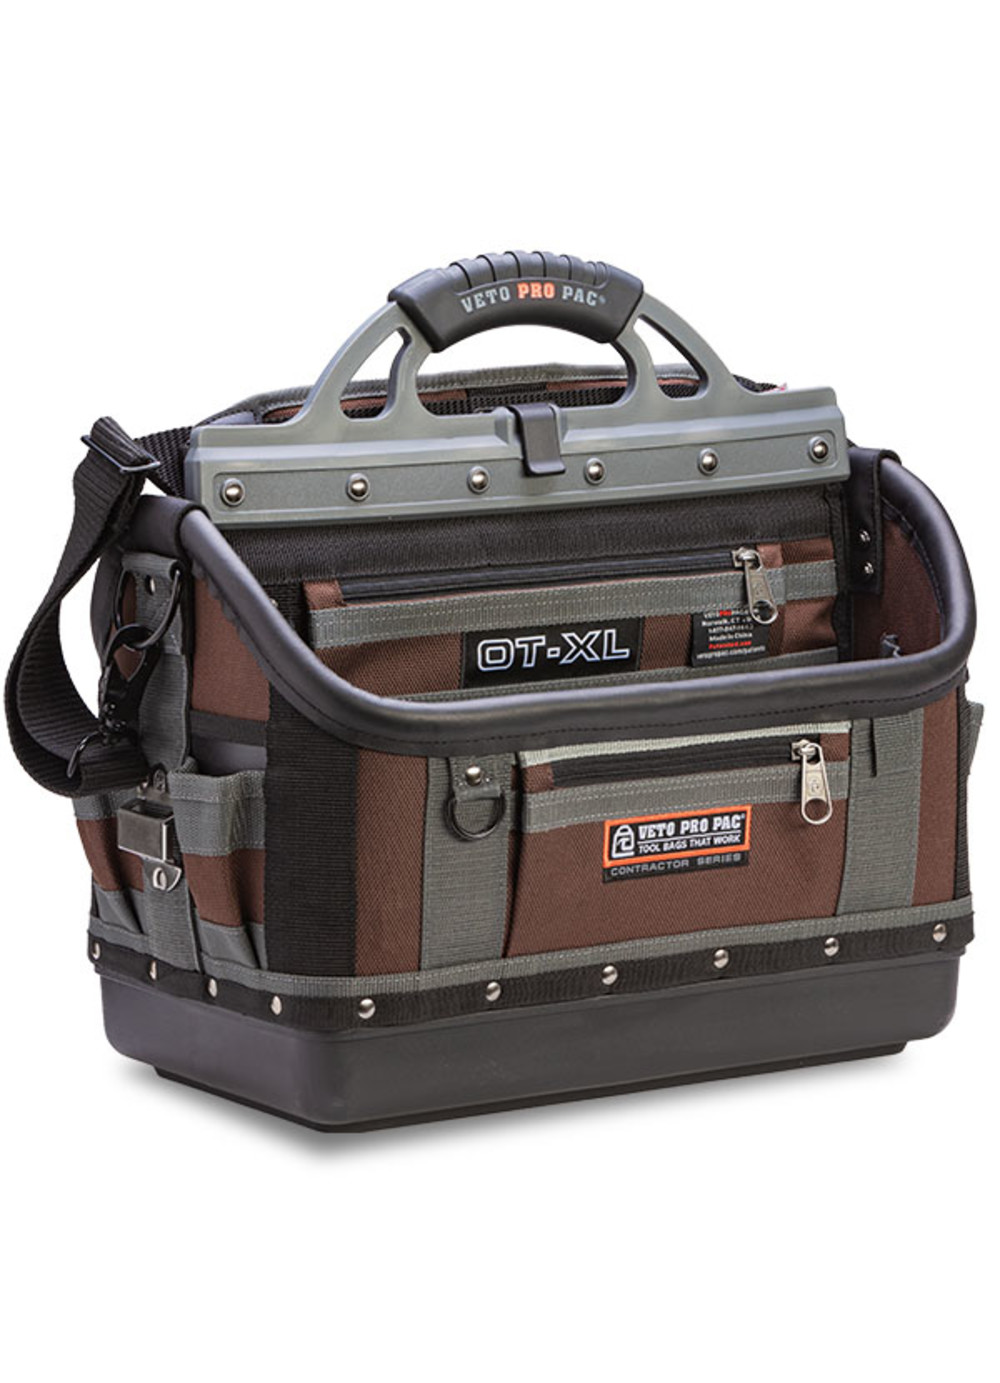 Veto Pro Pac OT-LC Compact Open Top All Purpose Tool Bag 